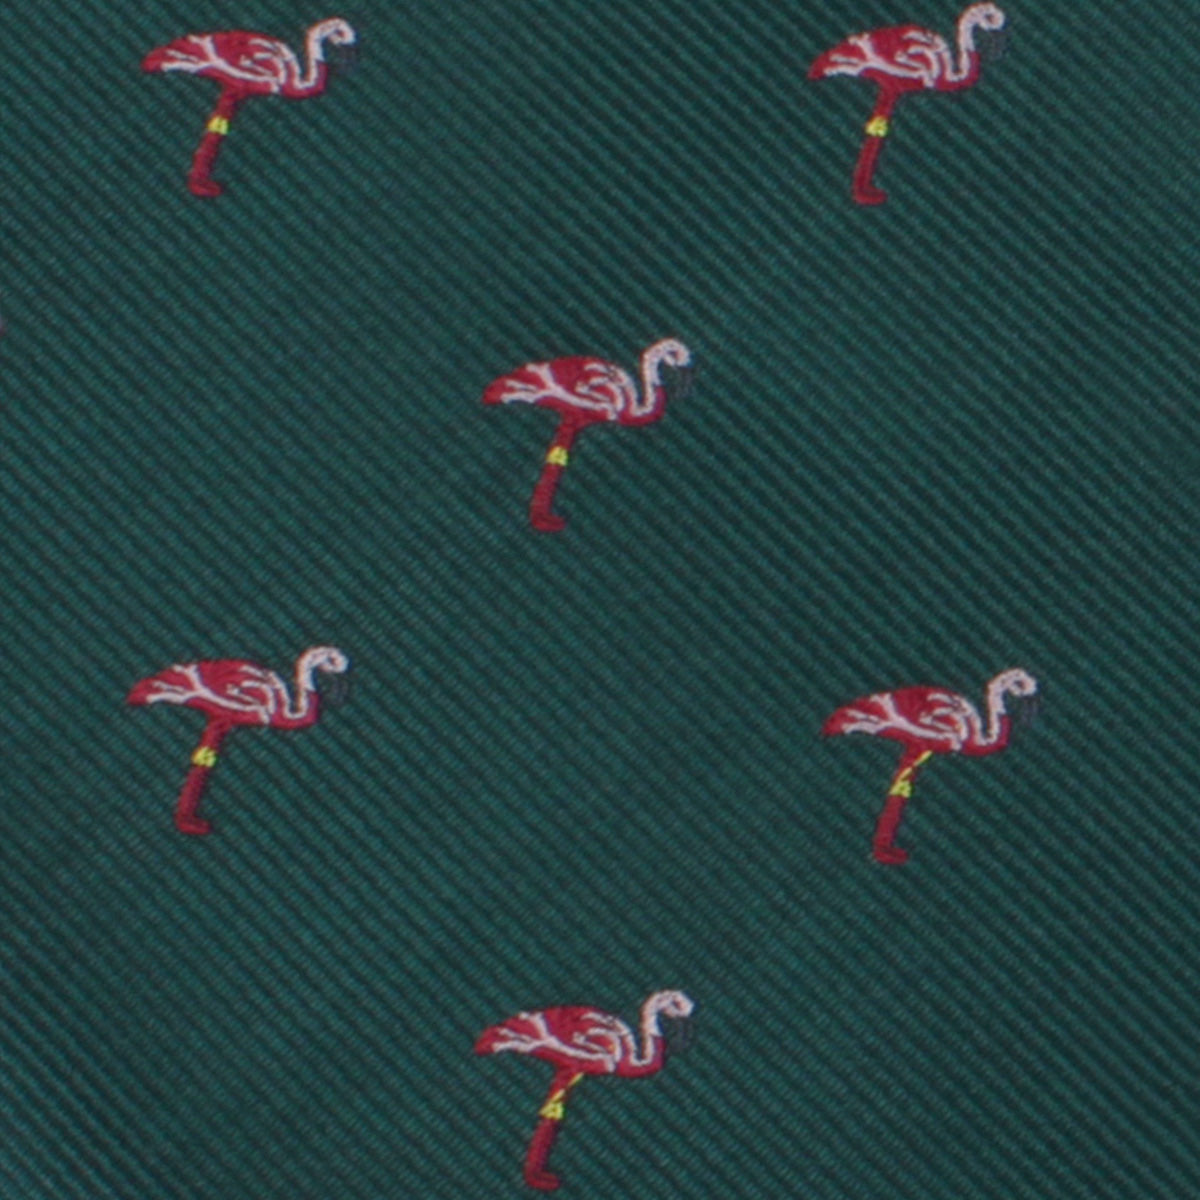 Caribbean Royal Green Flamingo Bow Tie Fabric